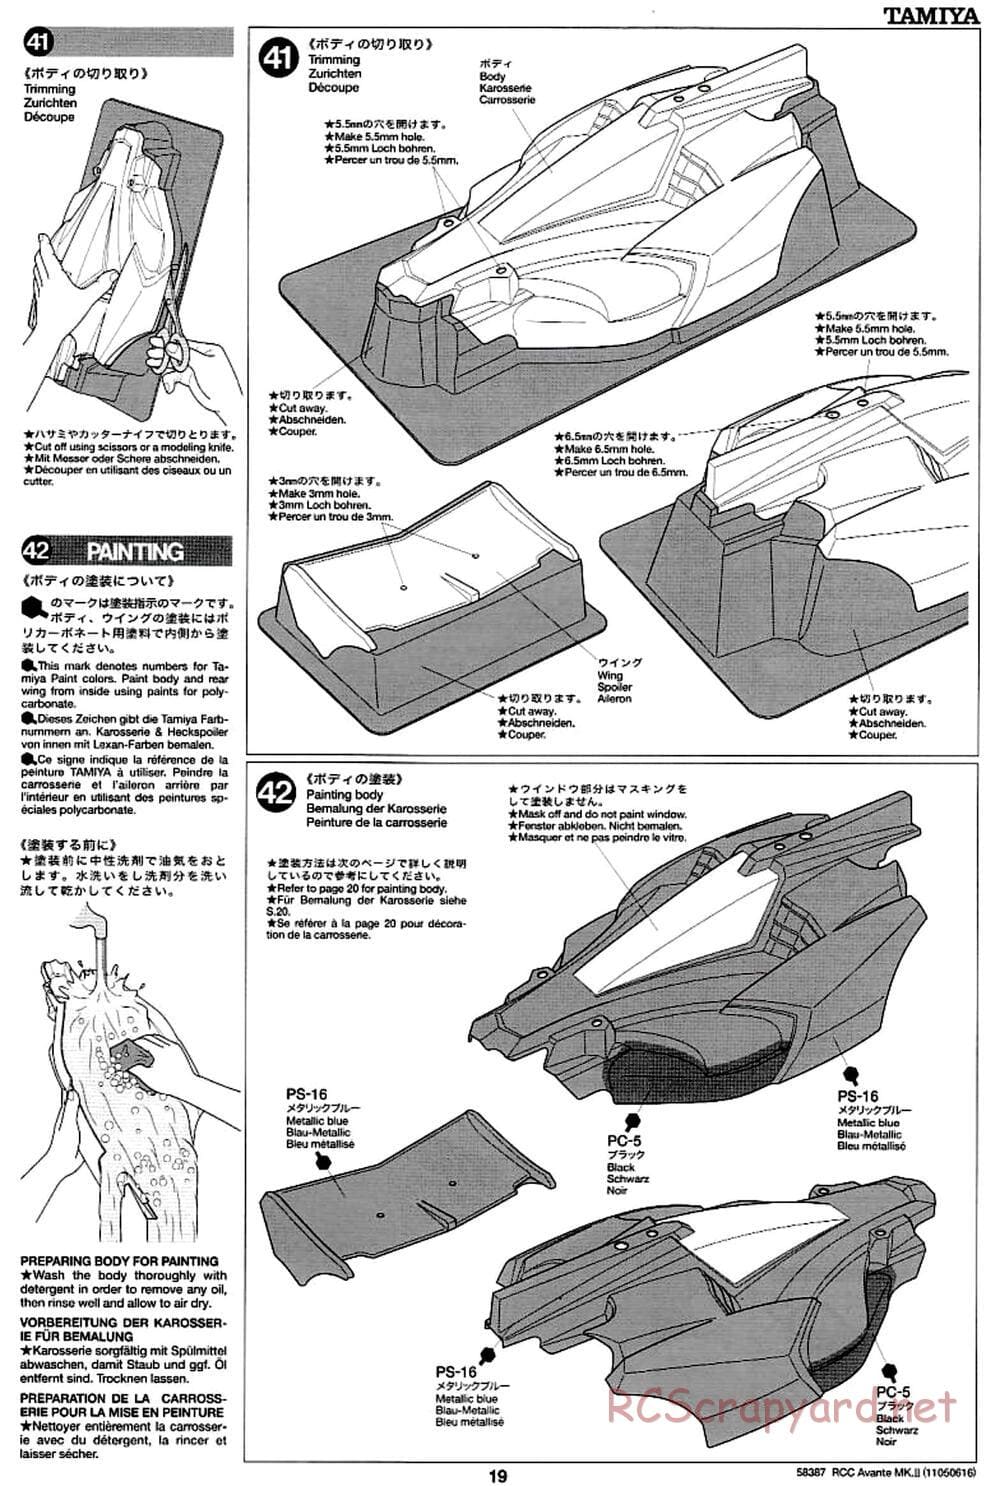 Tamiya - Avante Mk.II Chassis - Manual - Page 19